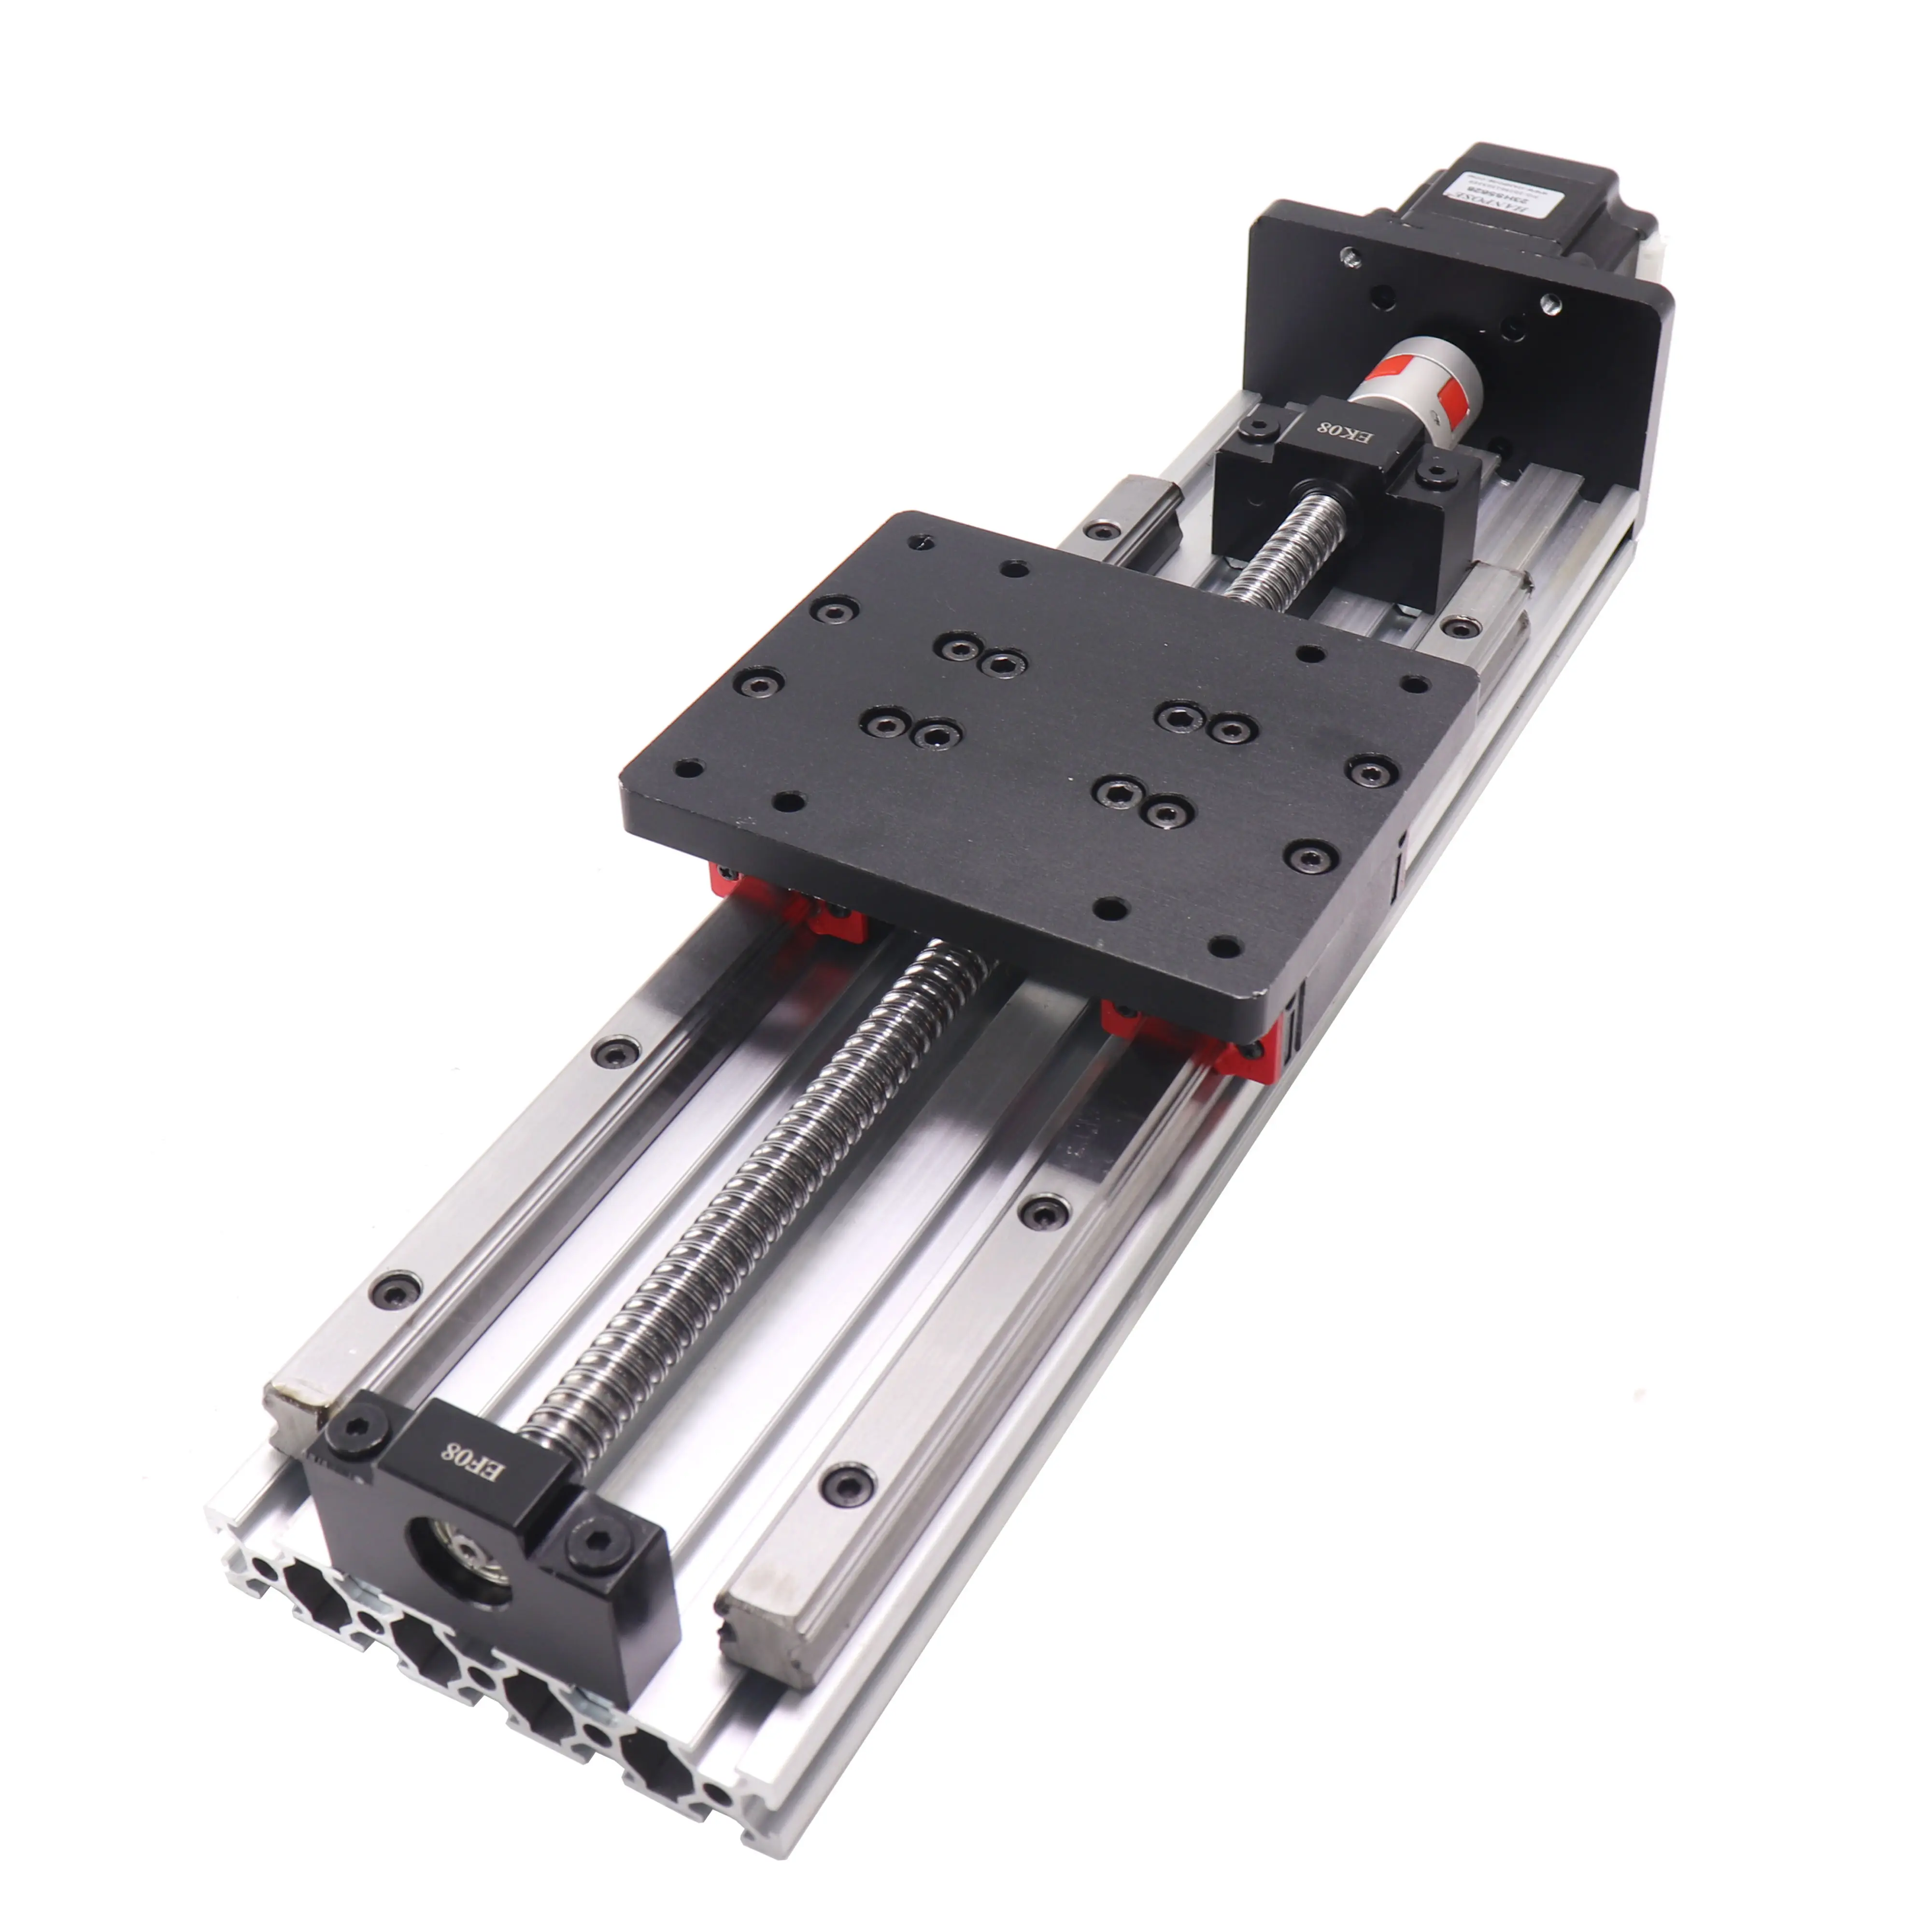 Módulo lineal de tornillo de guía cnc, de 400mm longitud de tornillo, 57 motores HPV6, mesa deslizante para impresión 3D, guía lineal beltlinear